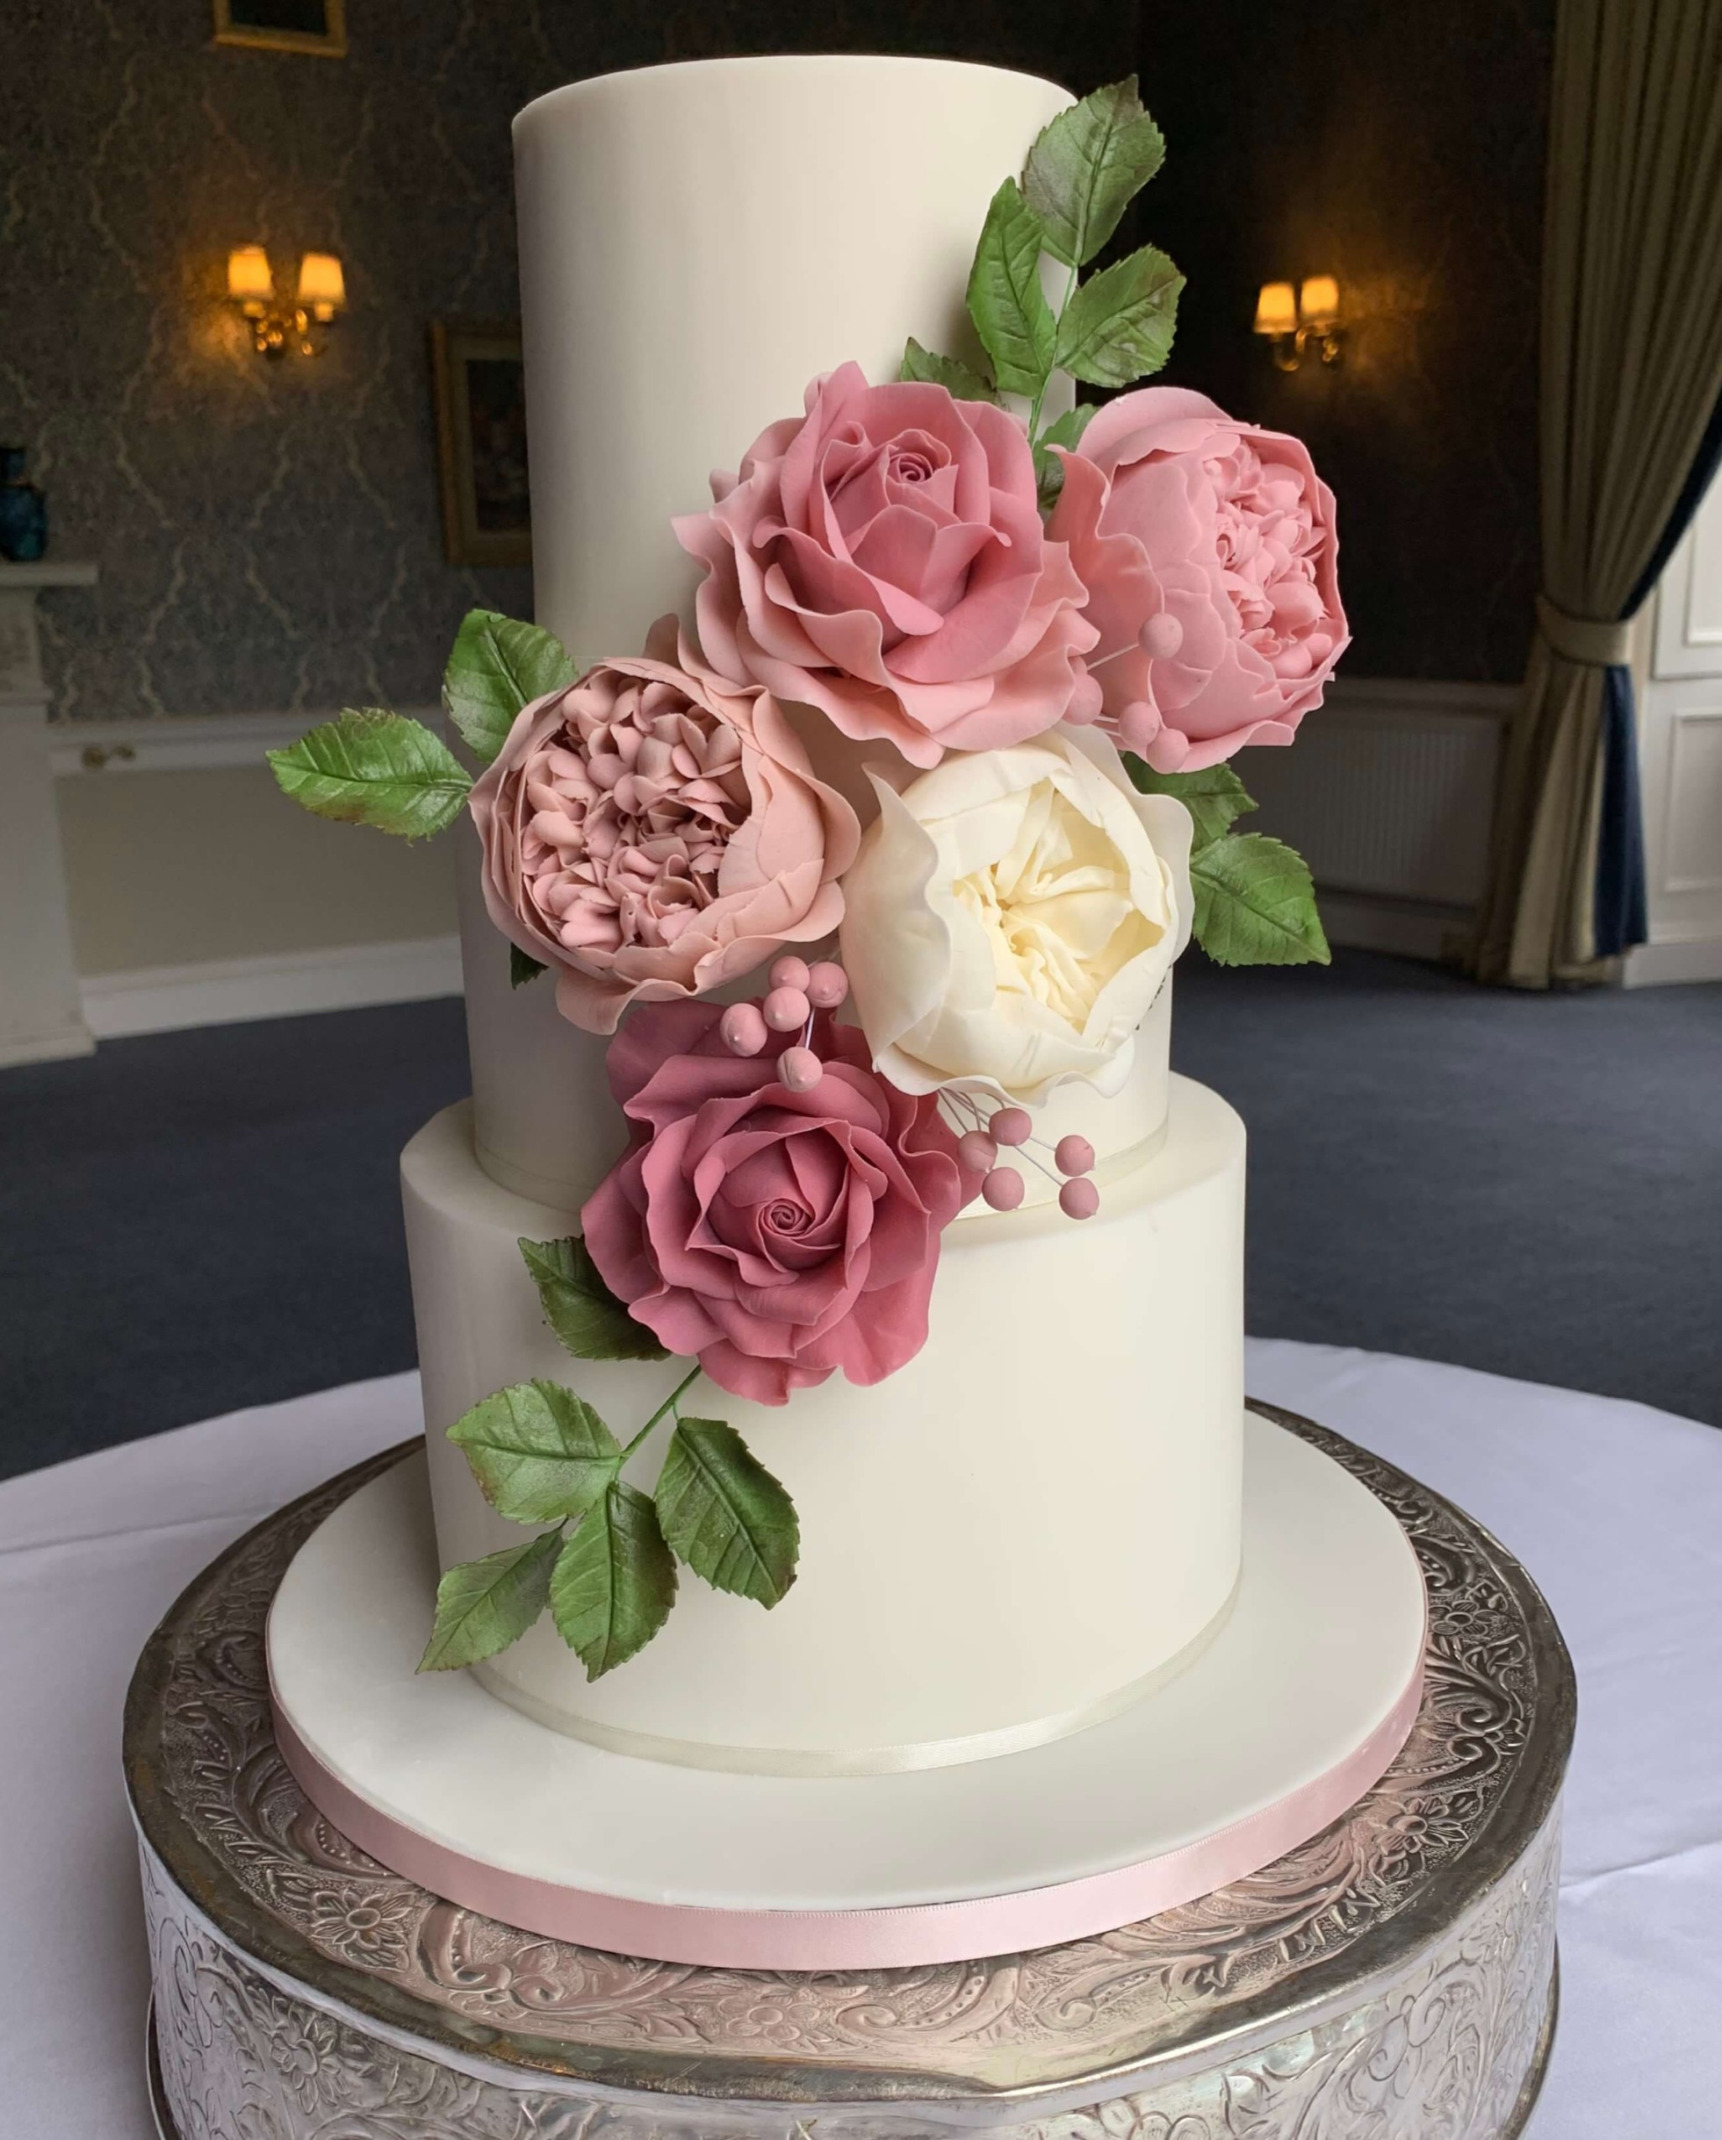 Beautiful 2 tier wedding cake with sugar flowers